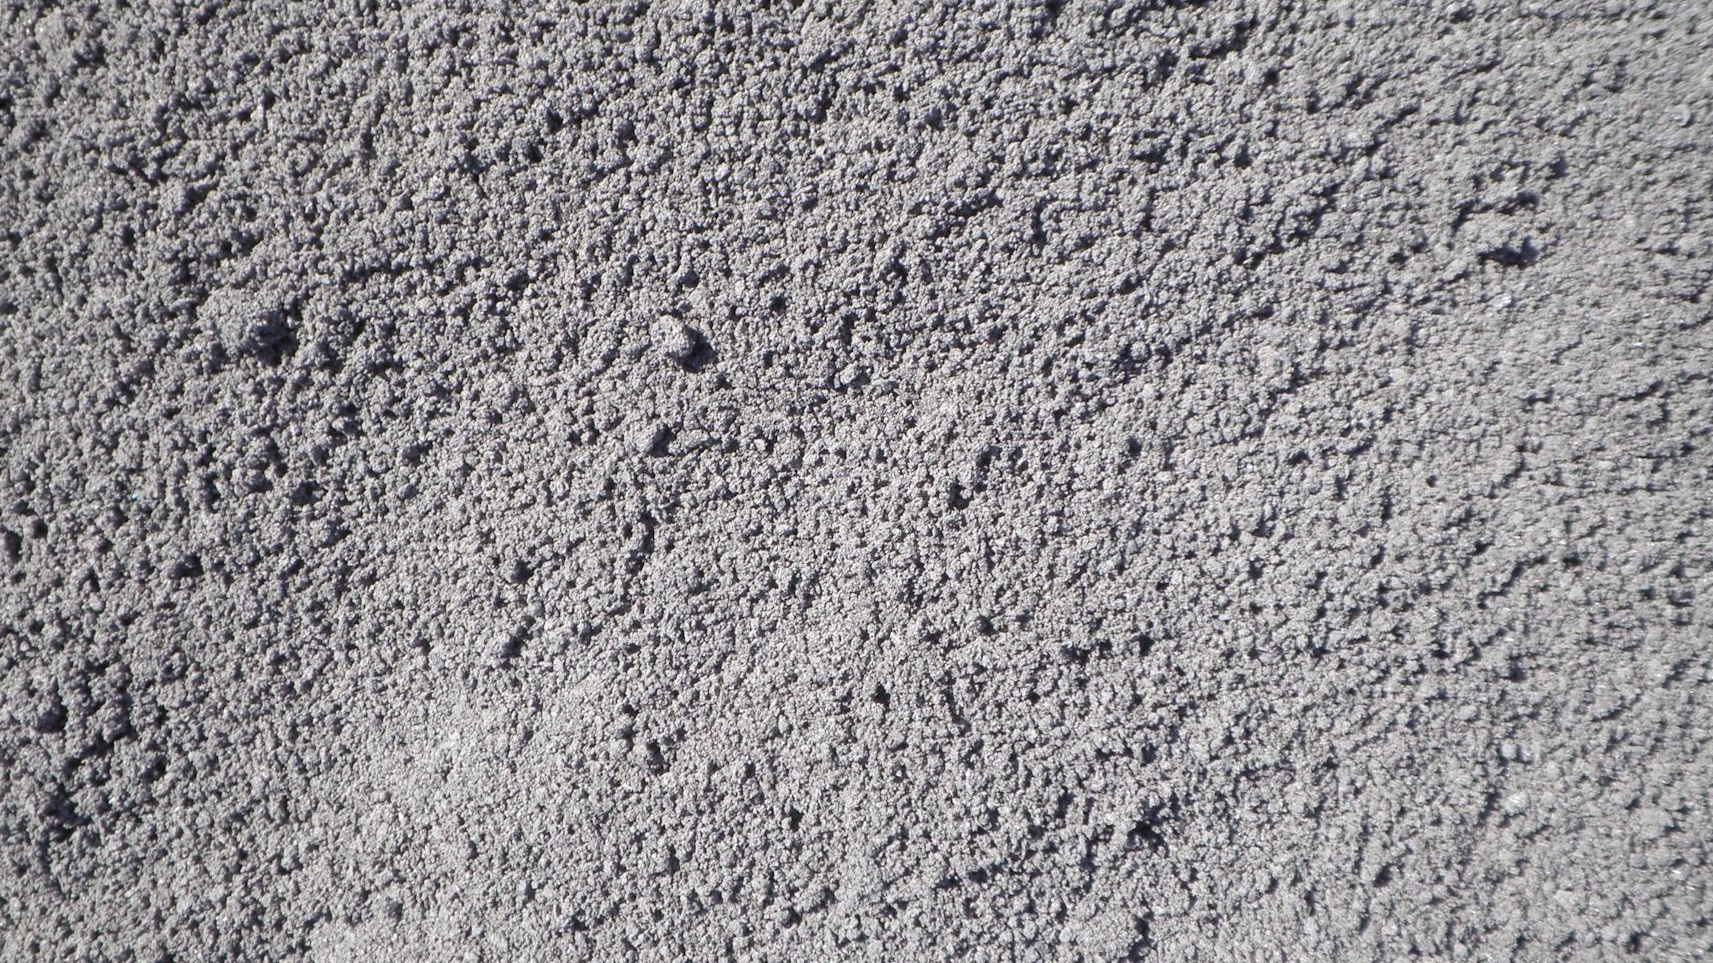 areia-industrial-2144x1608